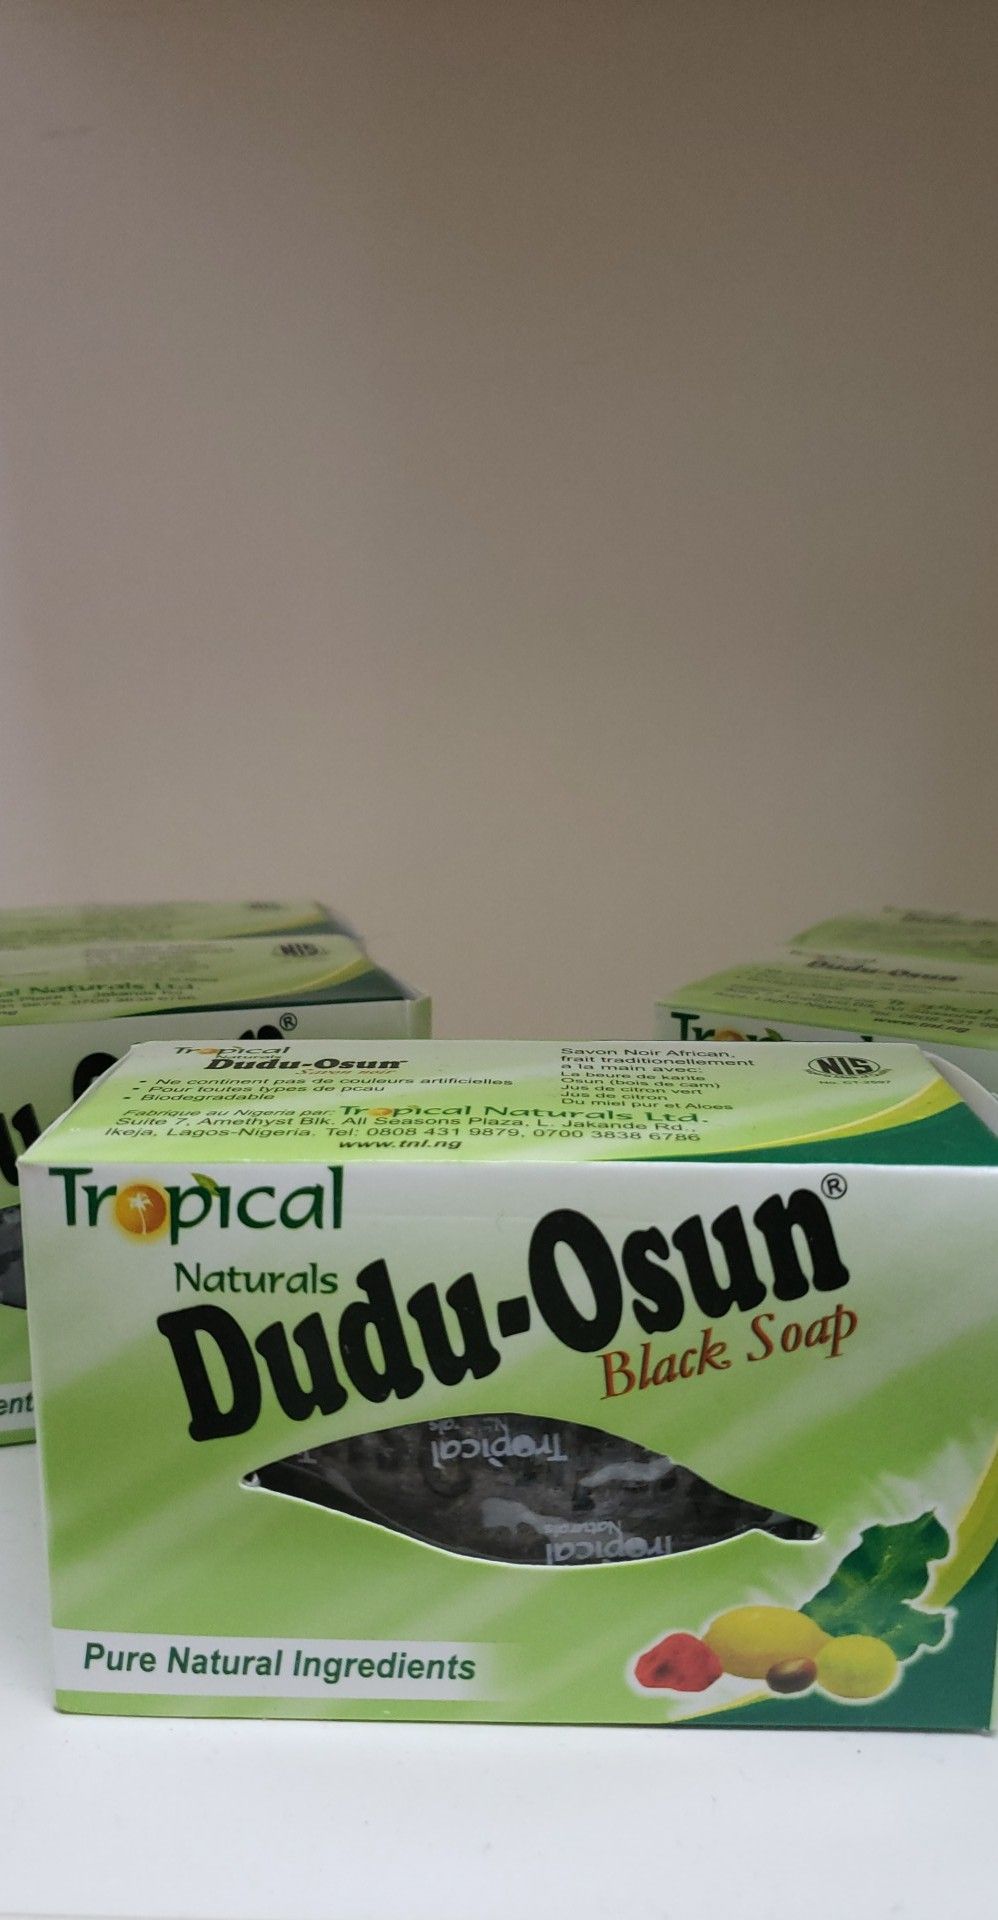 Dudu-Osun All-Natural African Black Soap